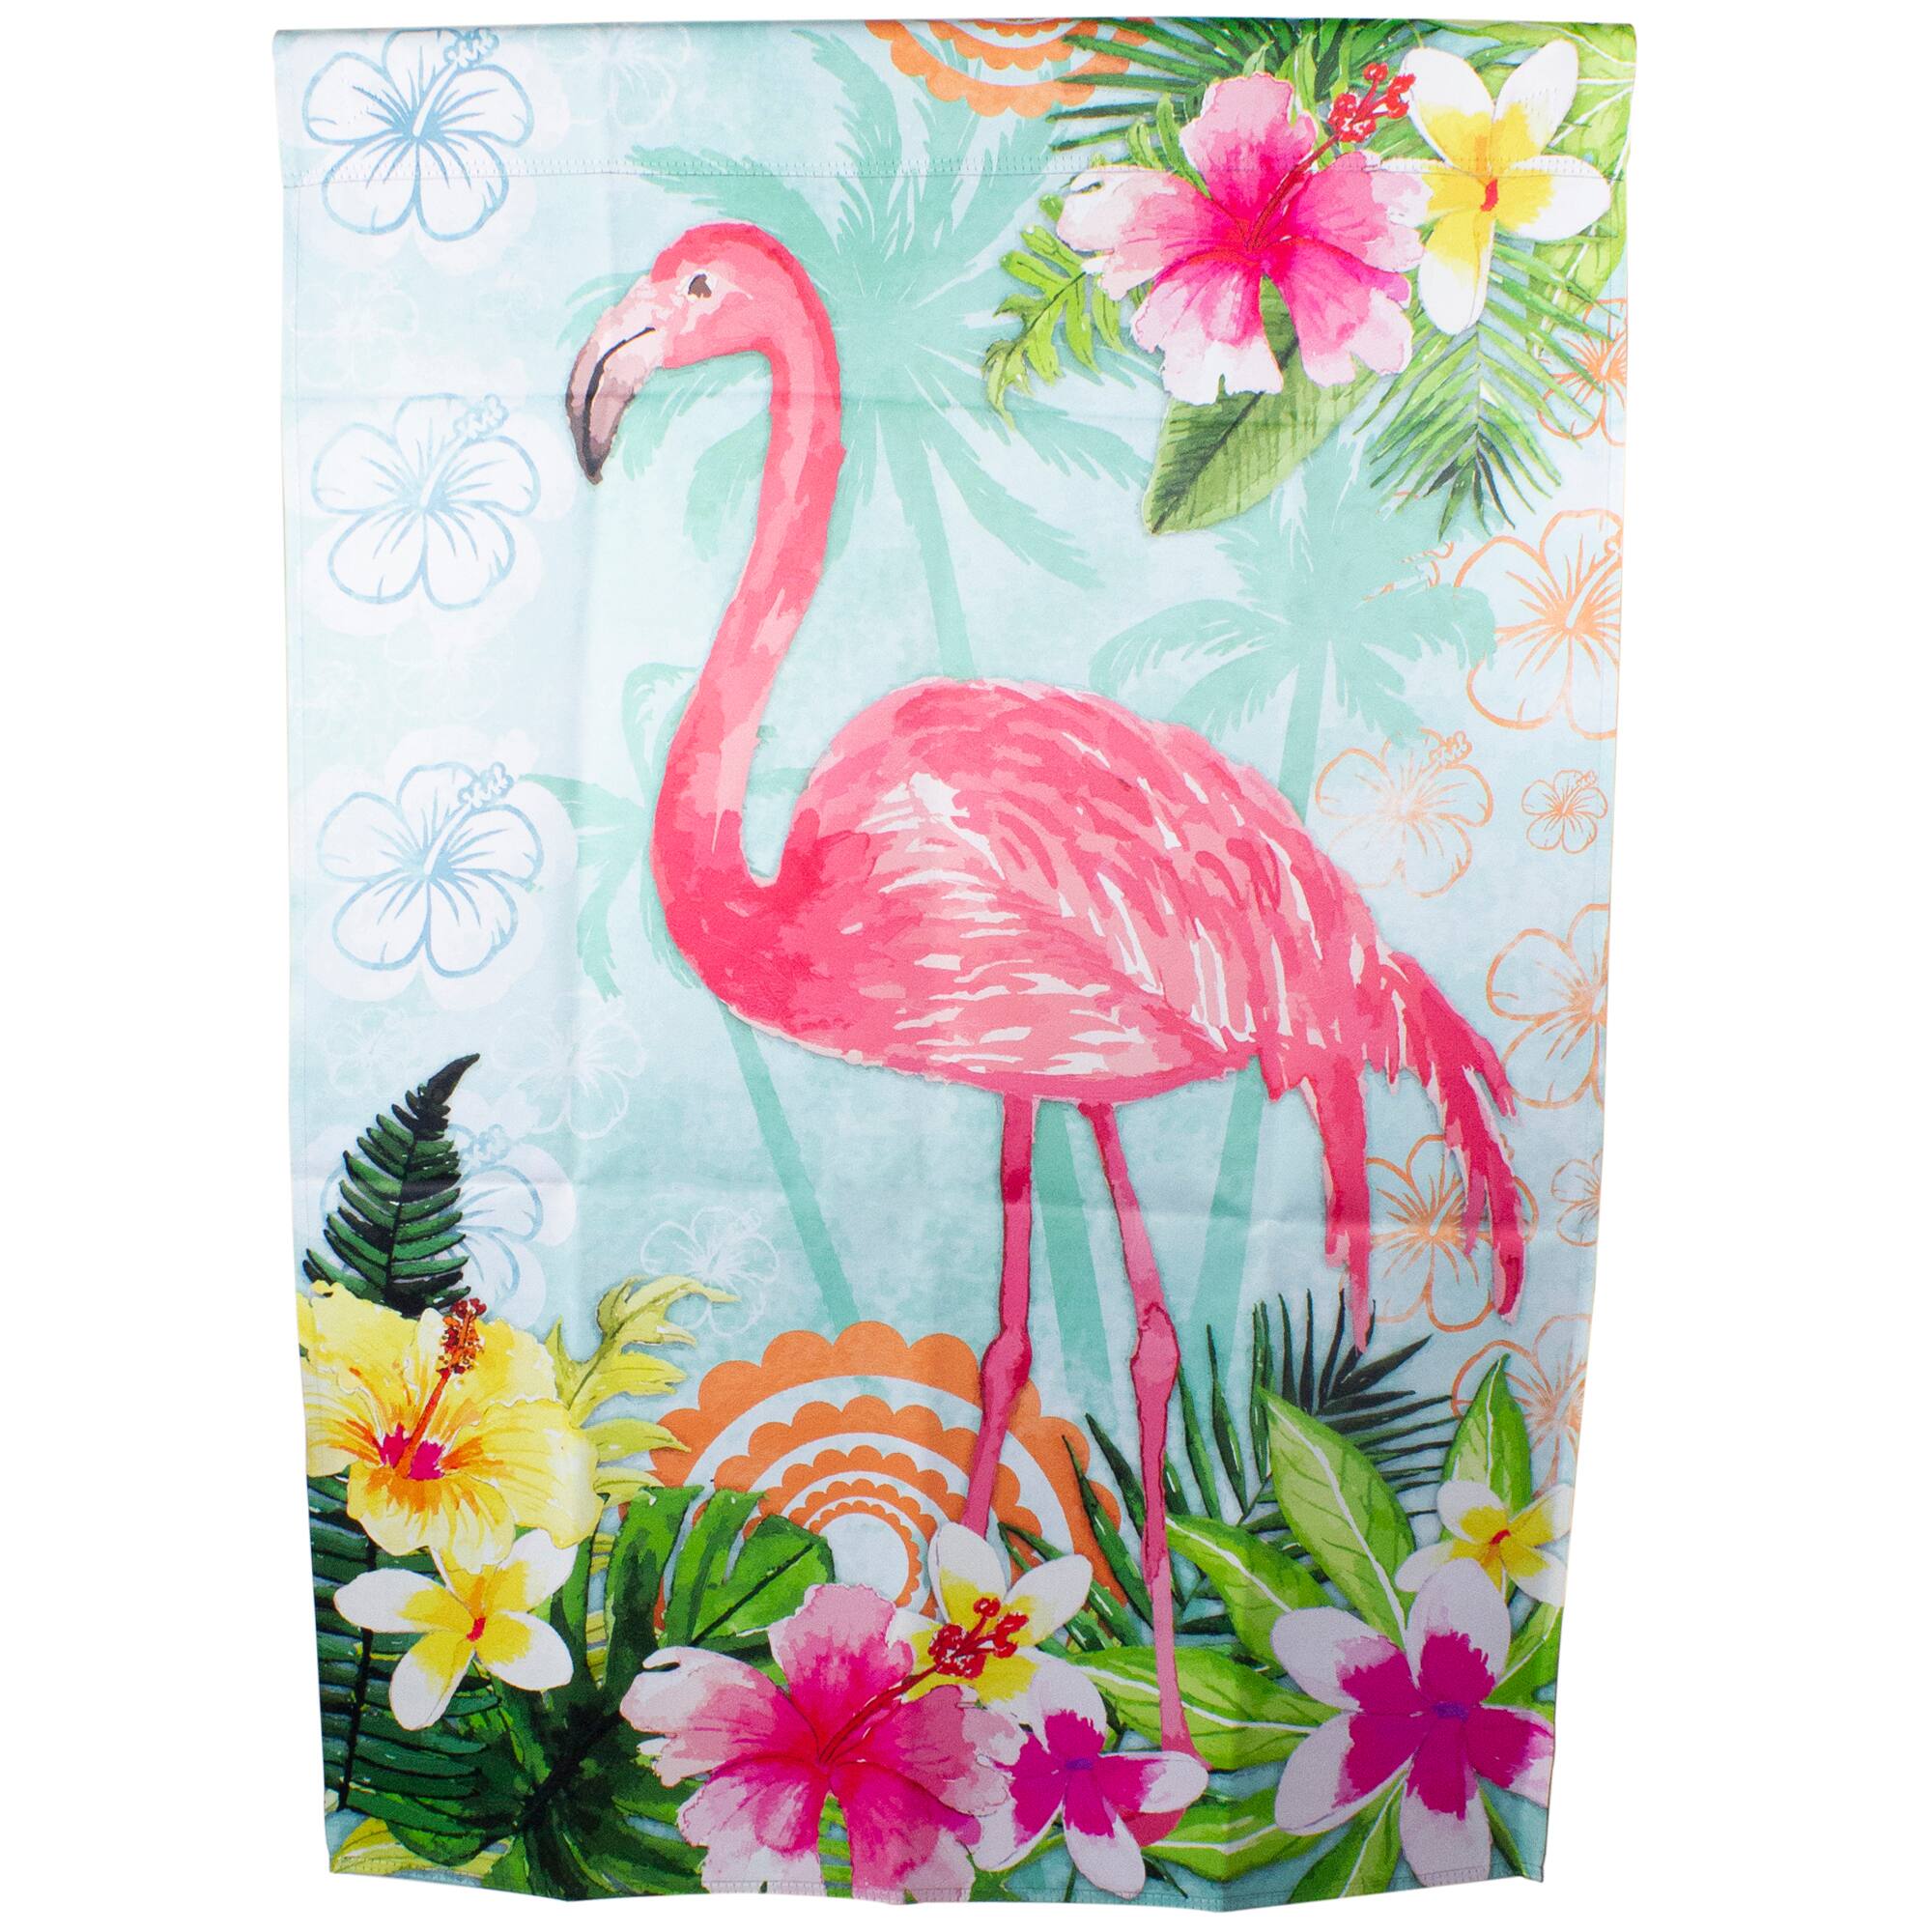 Tropical Flamingo Spring Outdoor House Flag